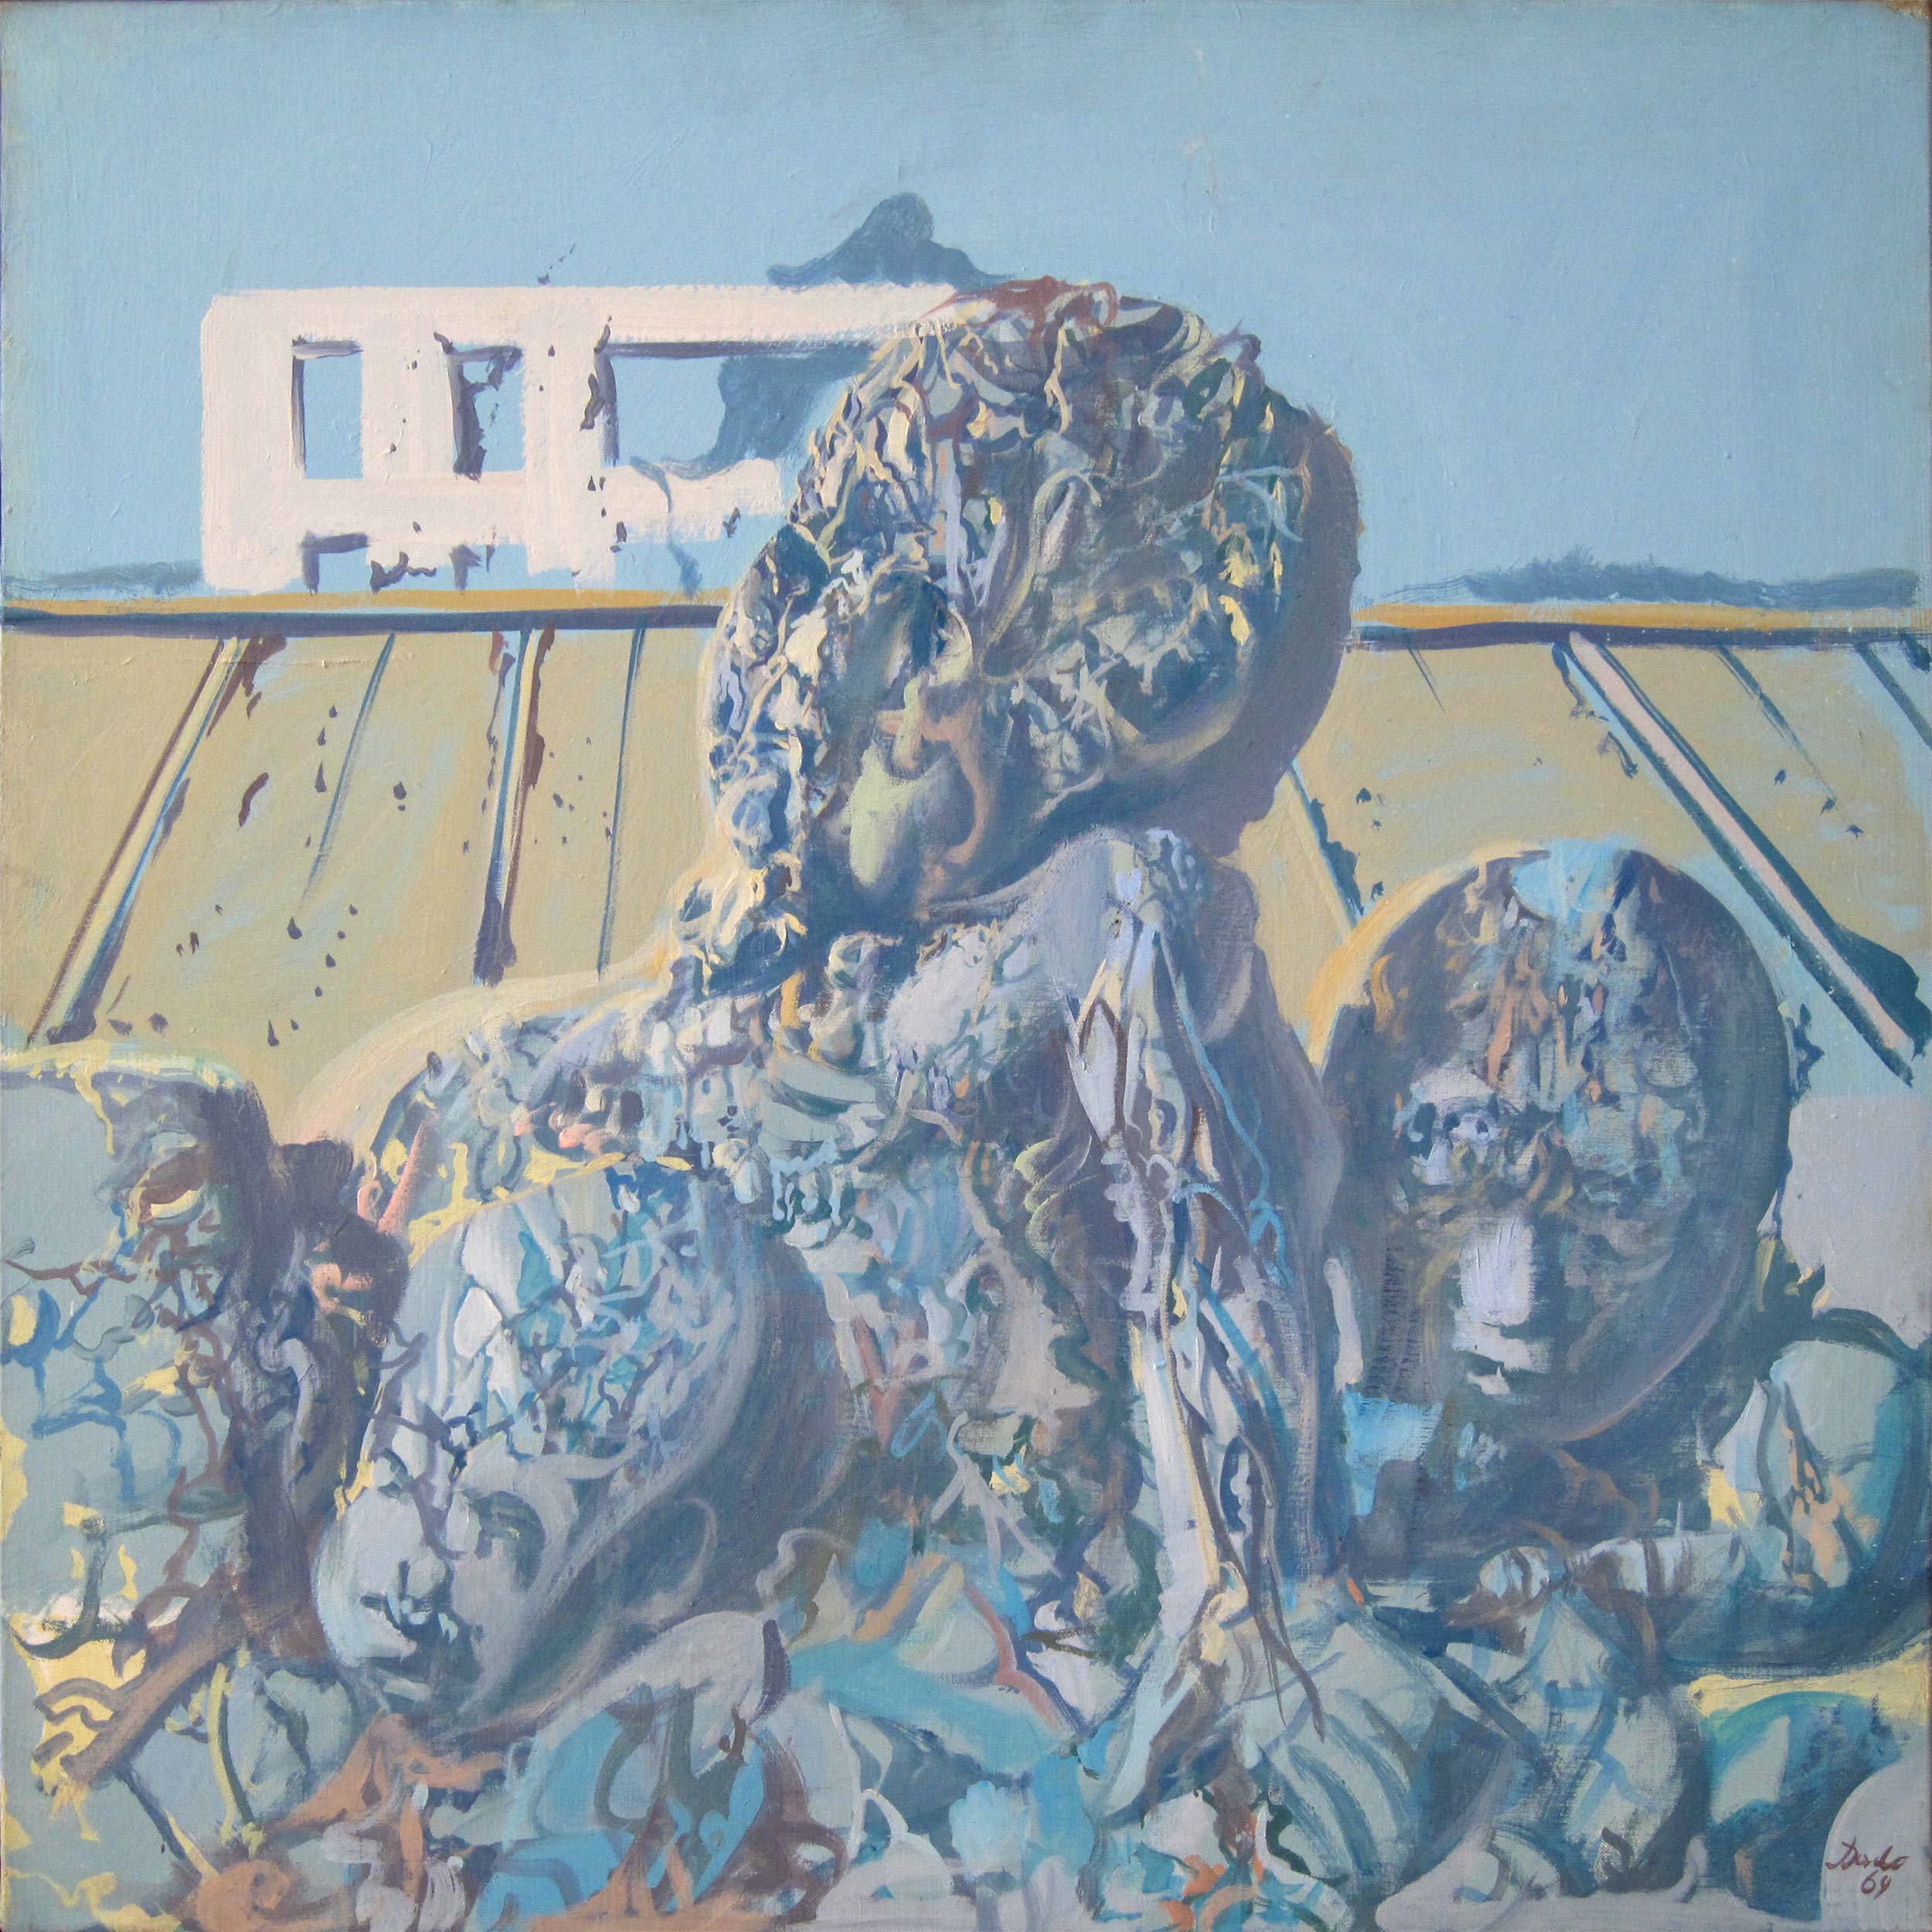 Untitled, 1969